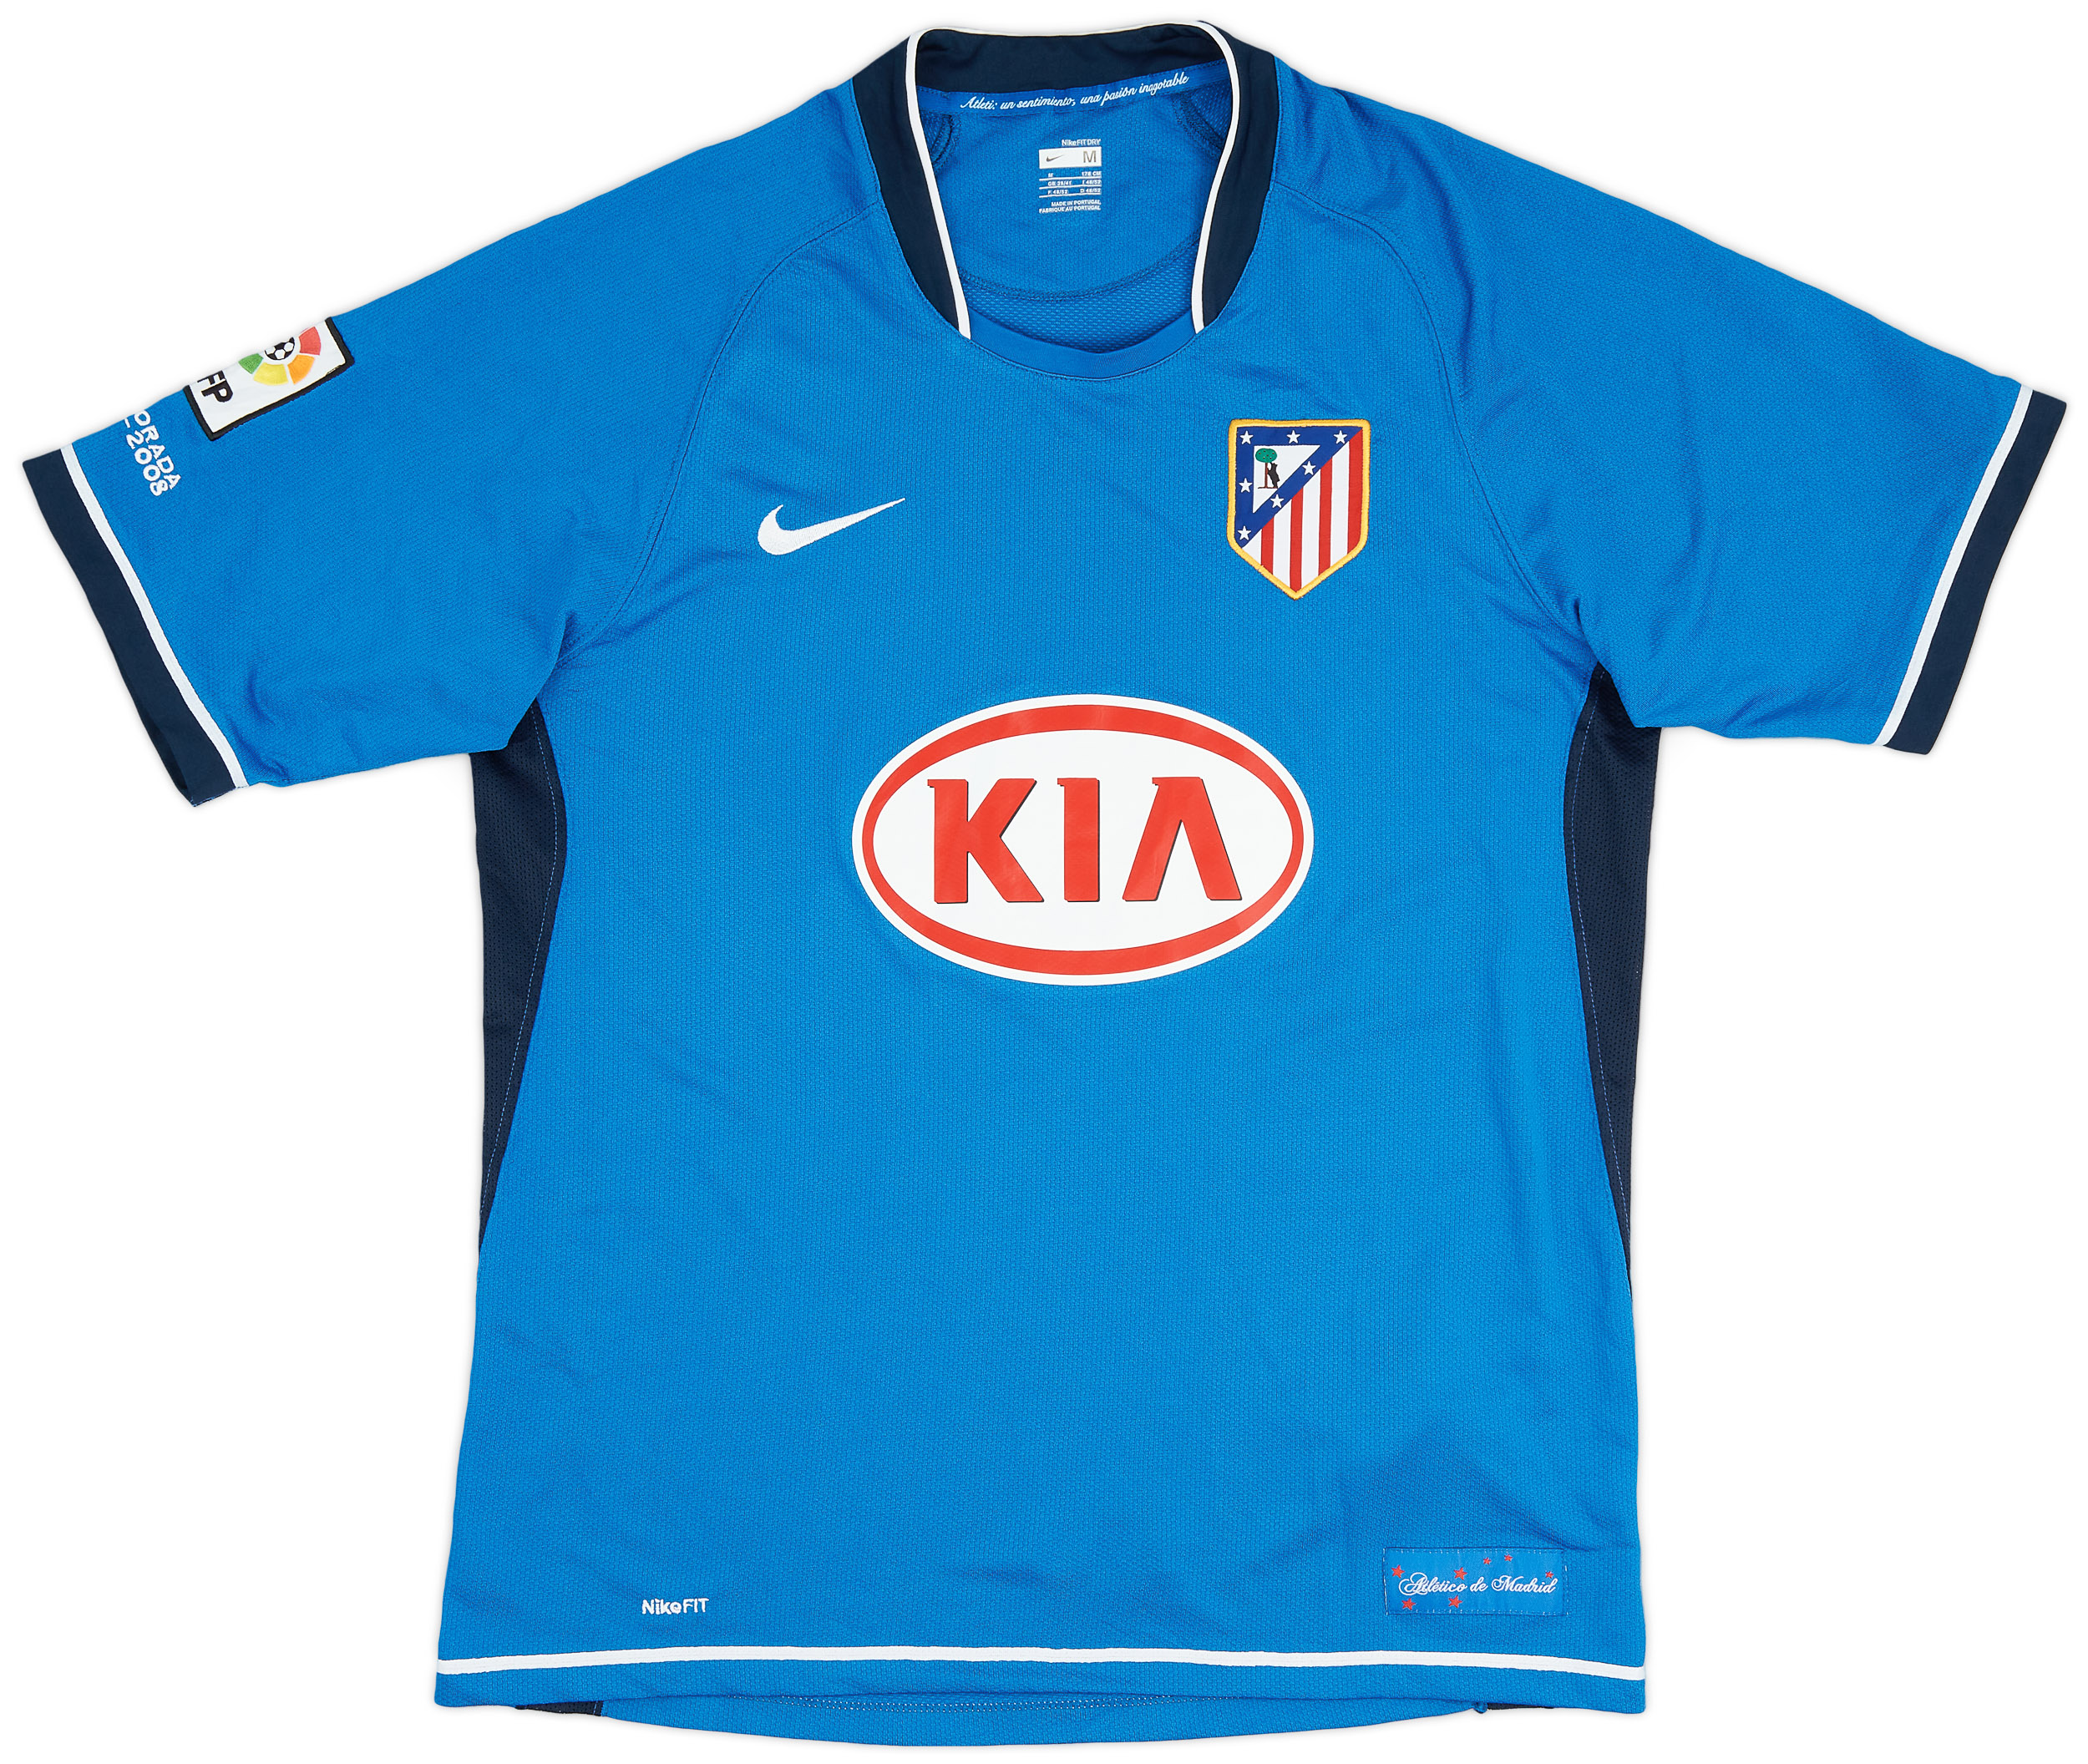 2007-08 Atletico Madrid Away Shirt - 9/10 - ()